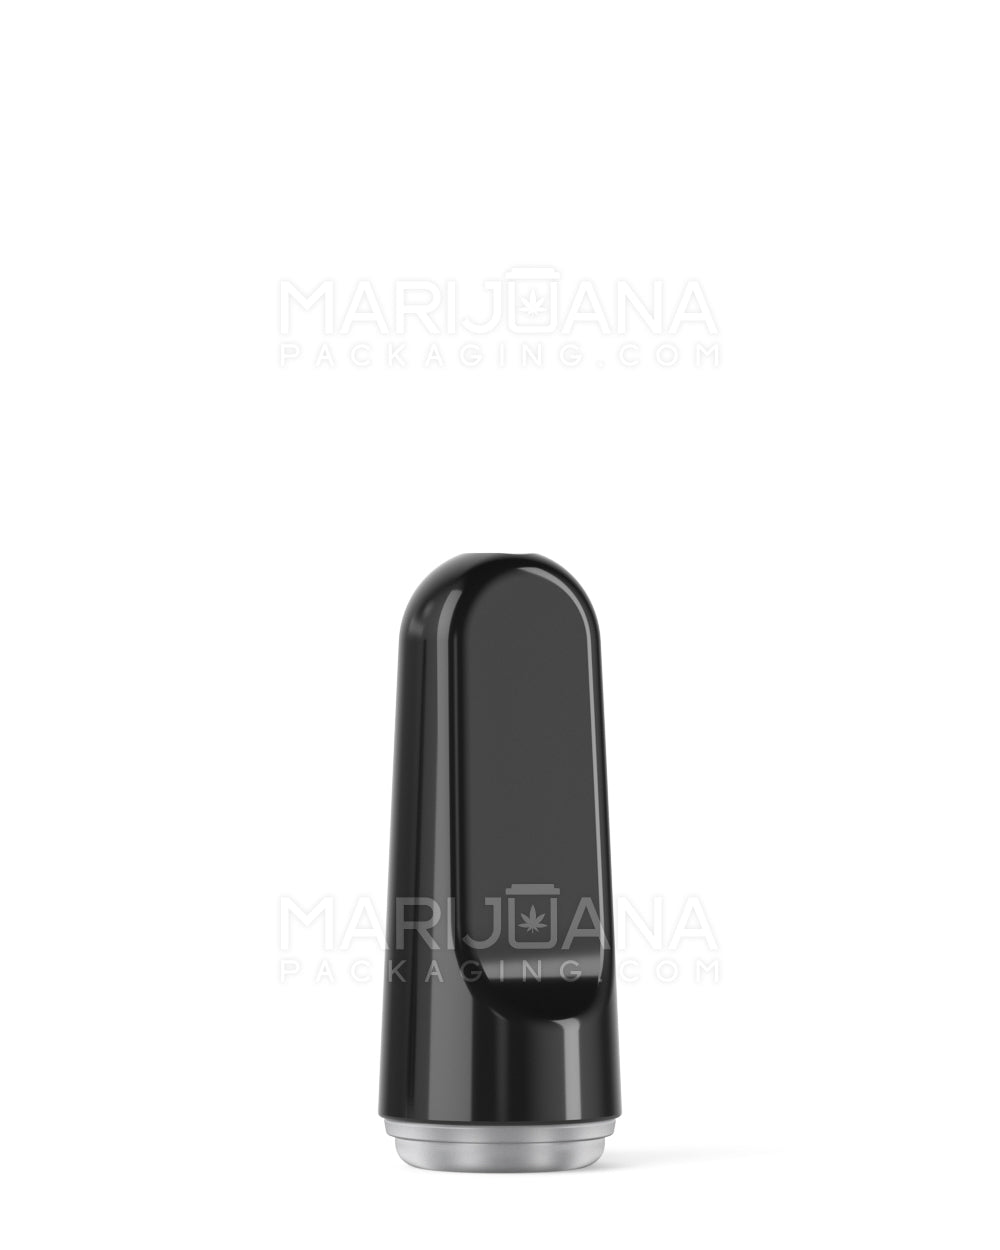 RAE | Flat Vape Mouthpiece for Screw On Ceramic Cartridges | Black Ceramic - Screw On - 100 Count